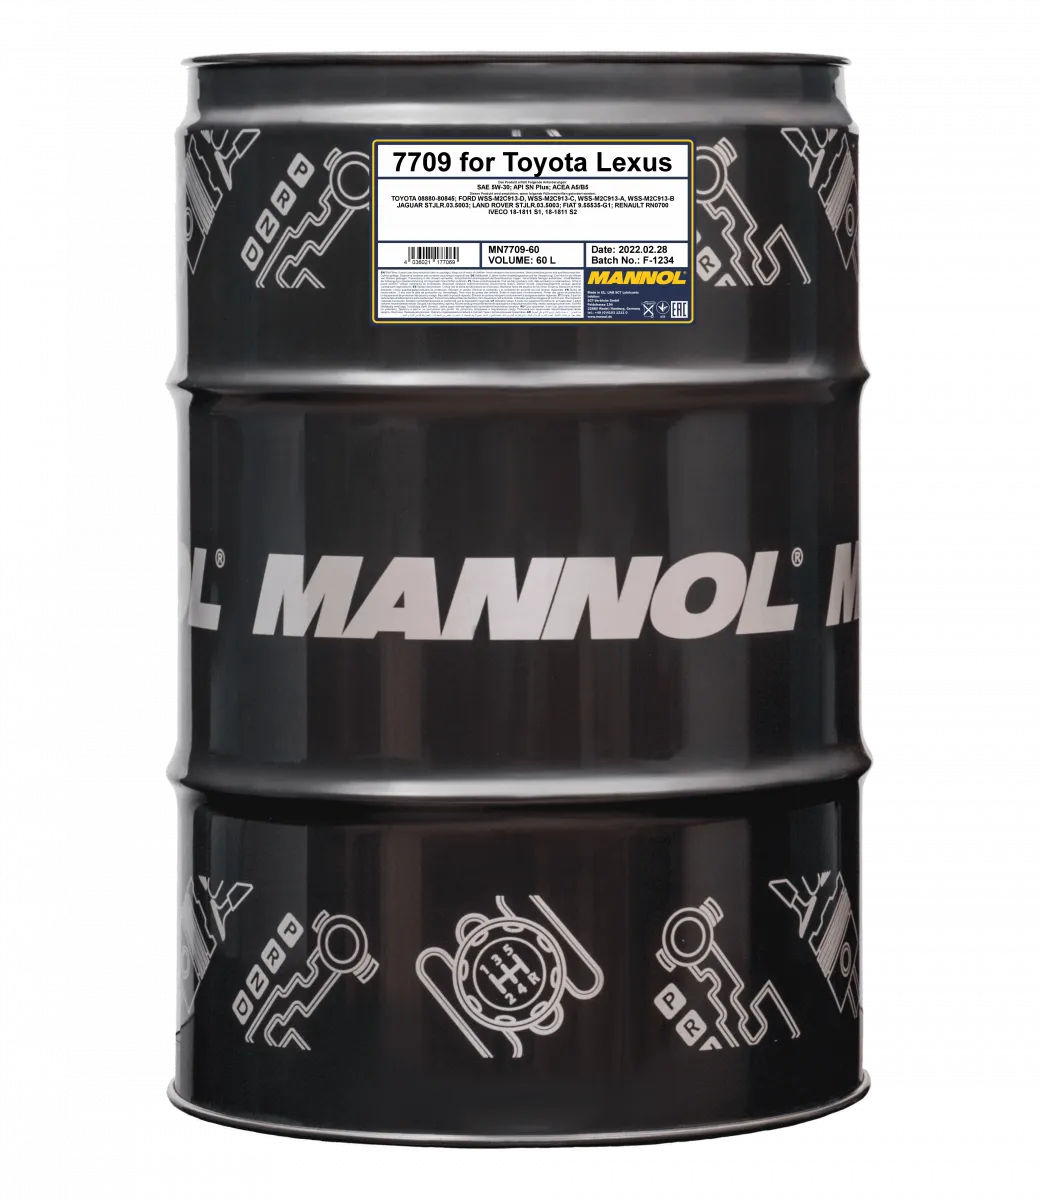 mannol for toyota lexus 5W-30#2